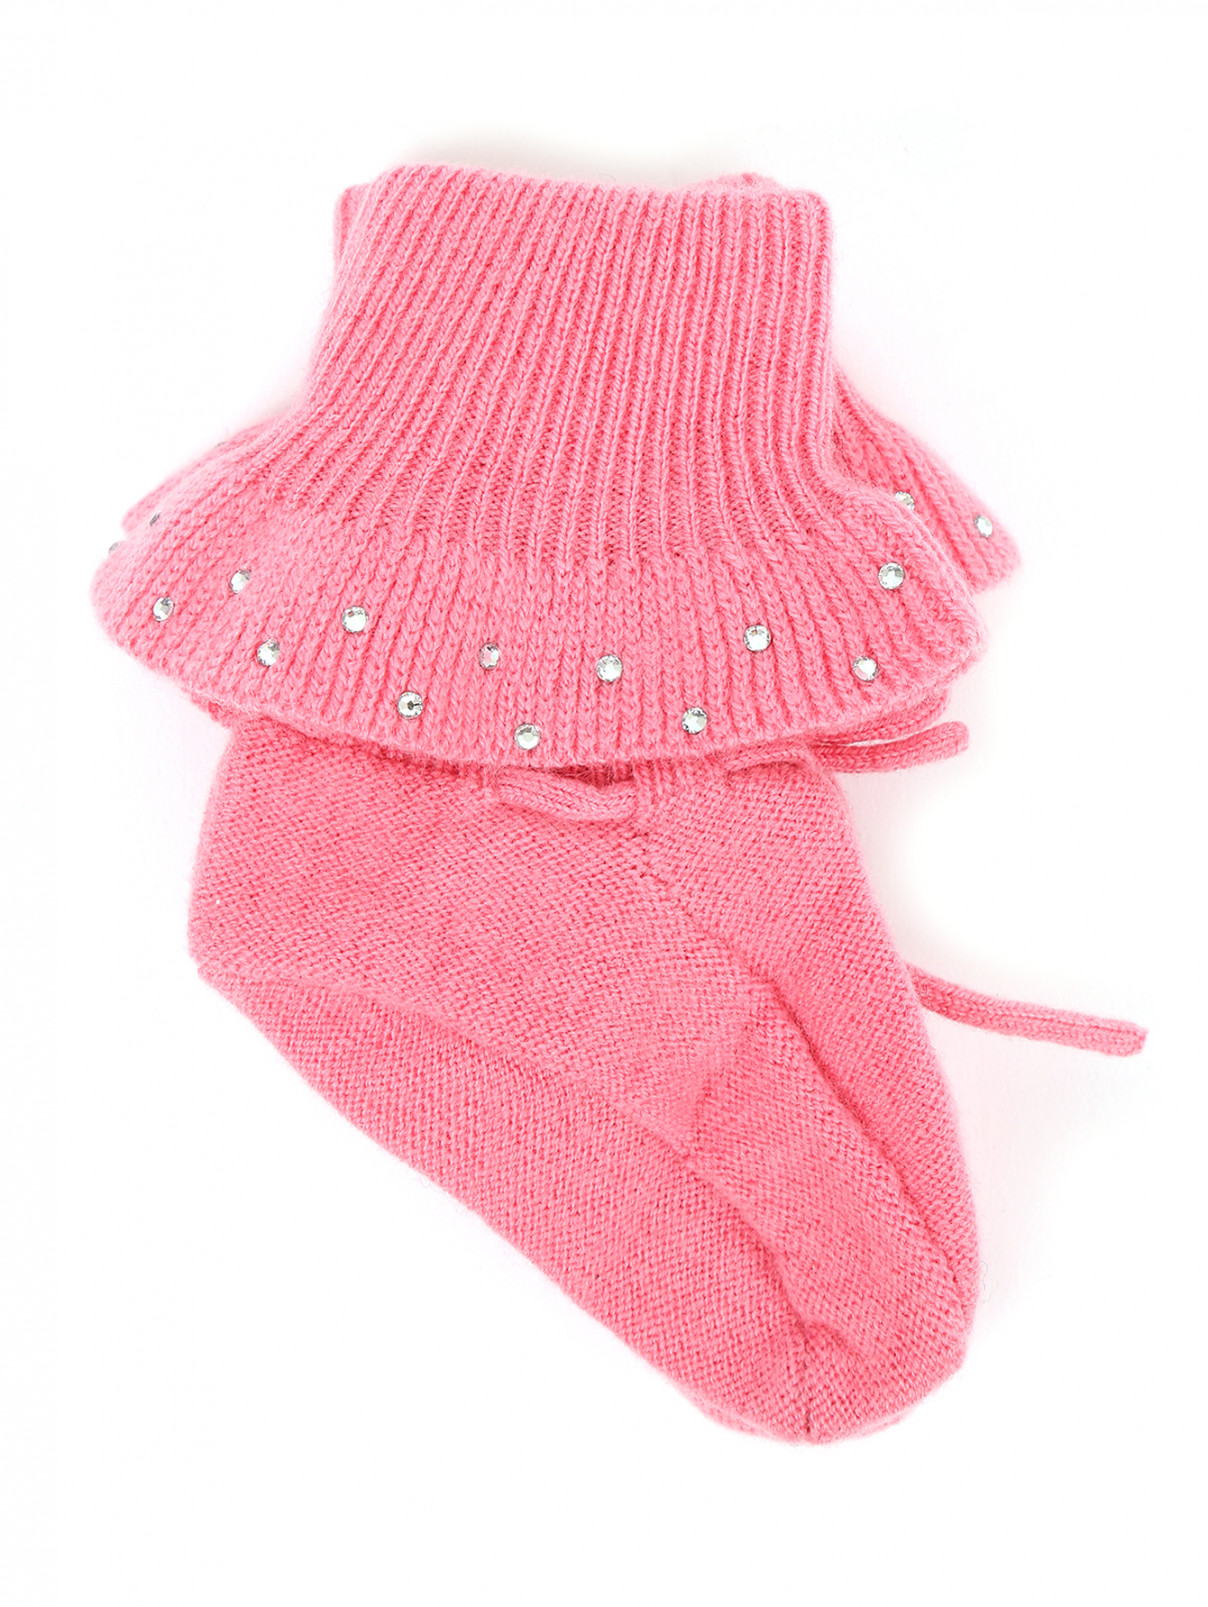 Носочки-пинетки со стразами Sonia Rykiel  –  Общий вид  – Цвет:  Розовый